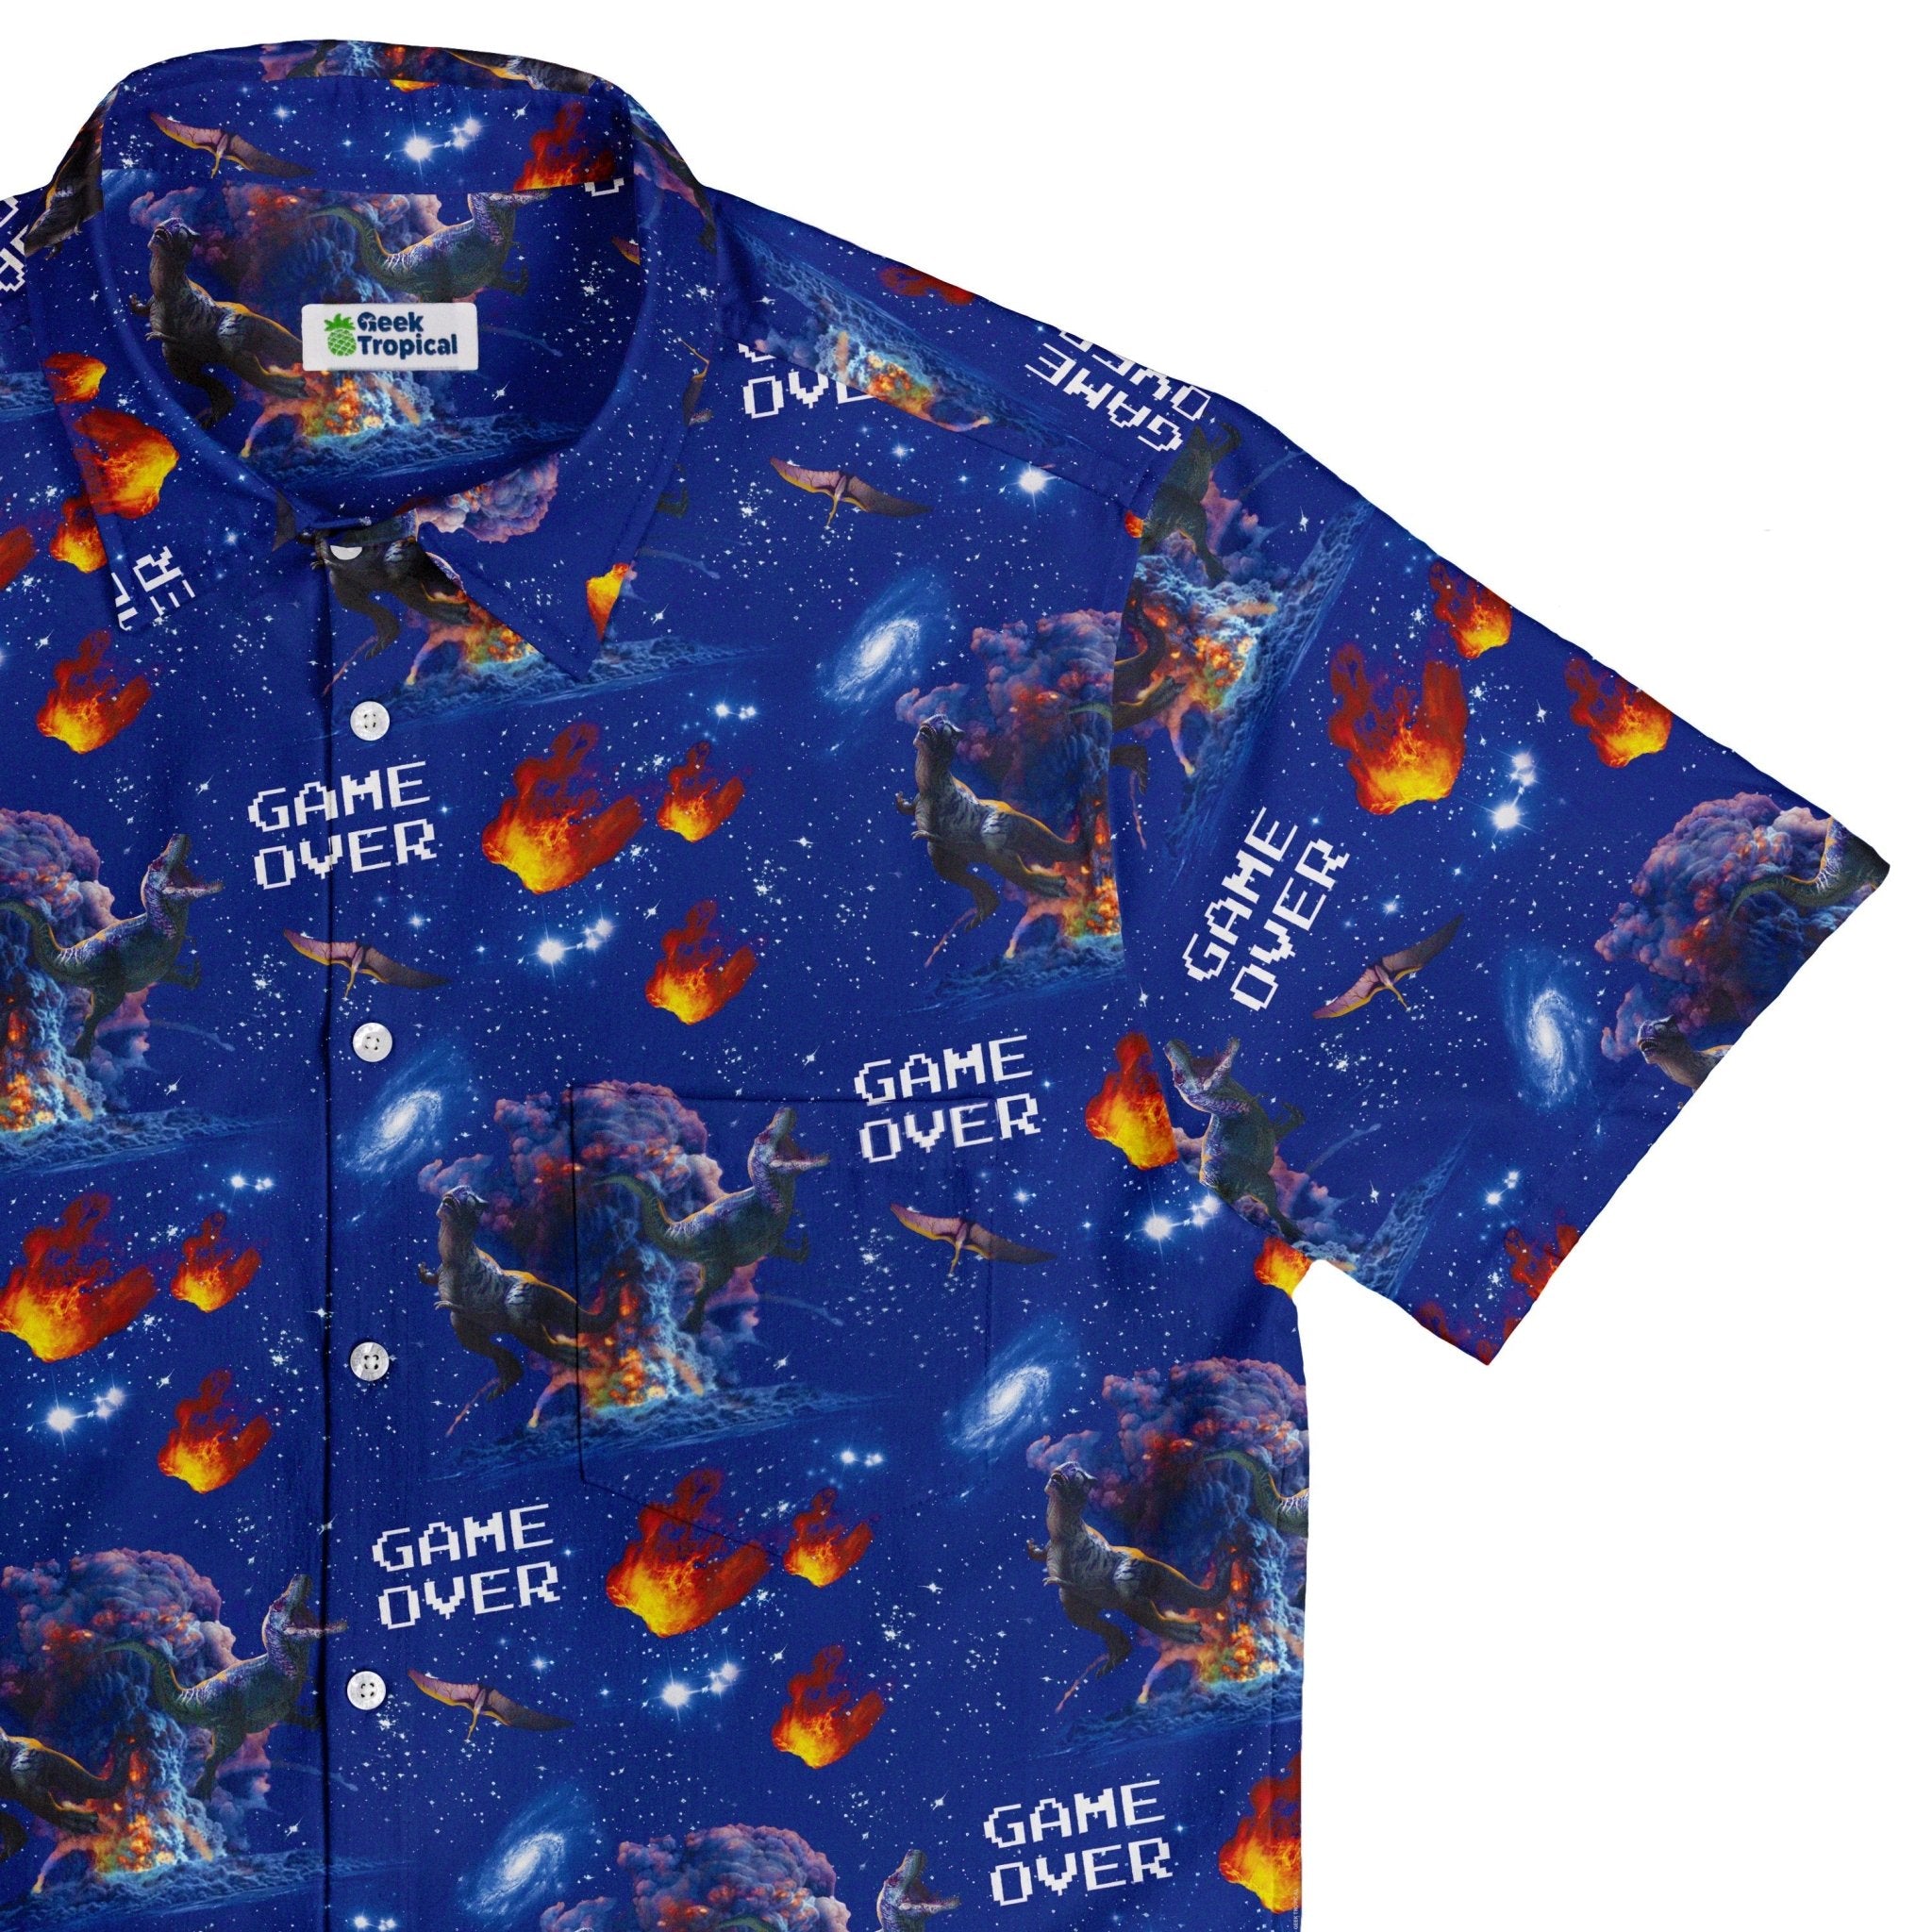 Dinosaur Game Over Button Up Shirt - adult sizing - Design by Random Galaxy - dinosaur print